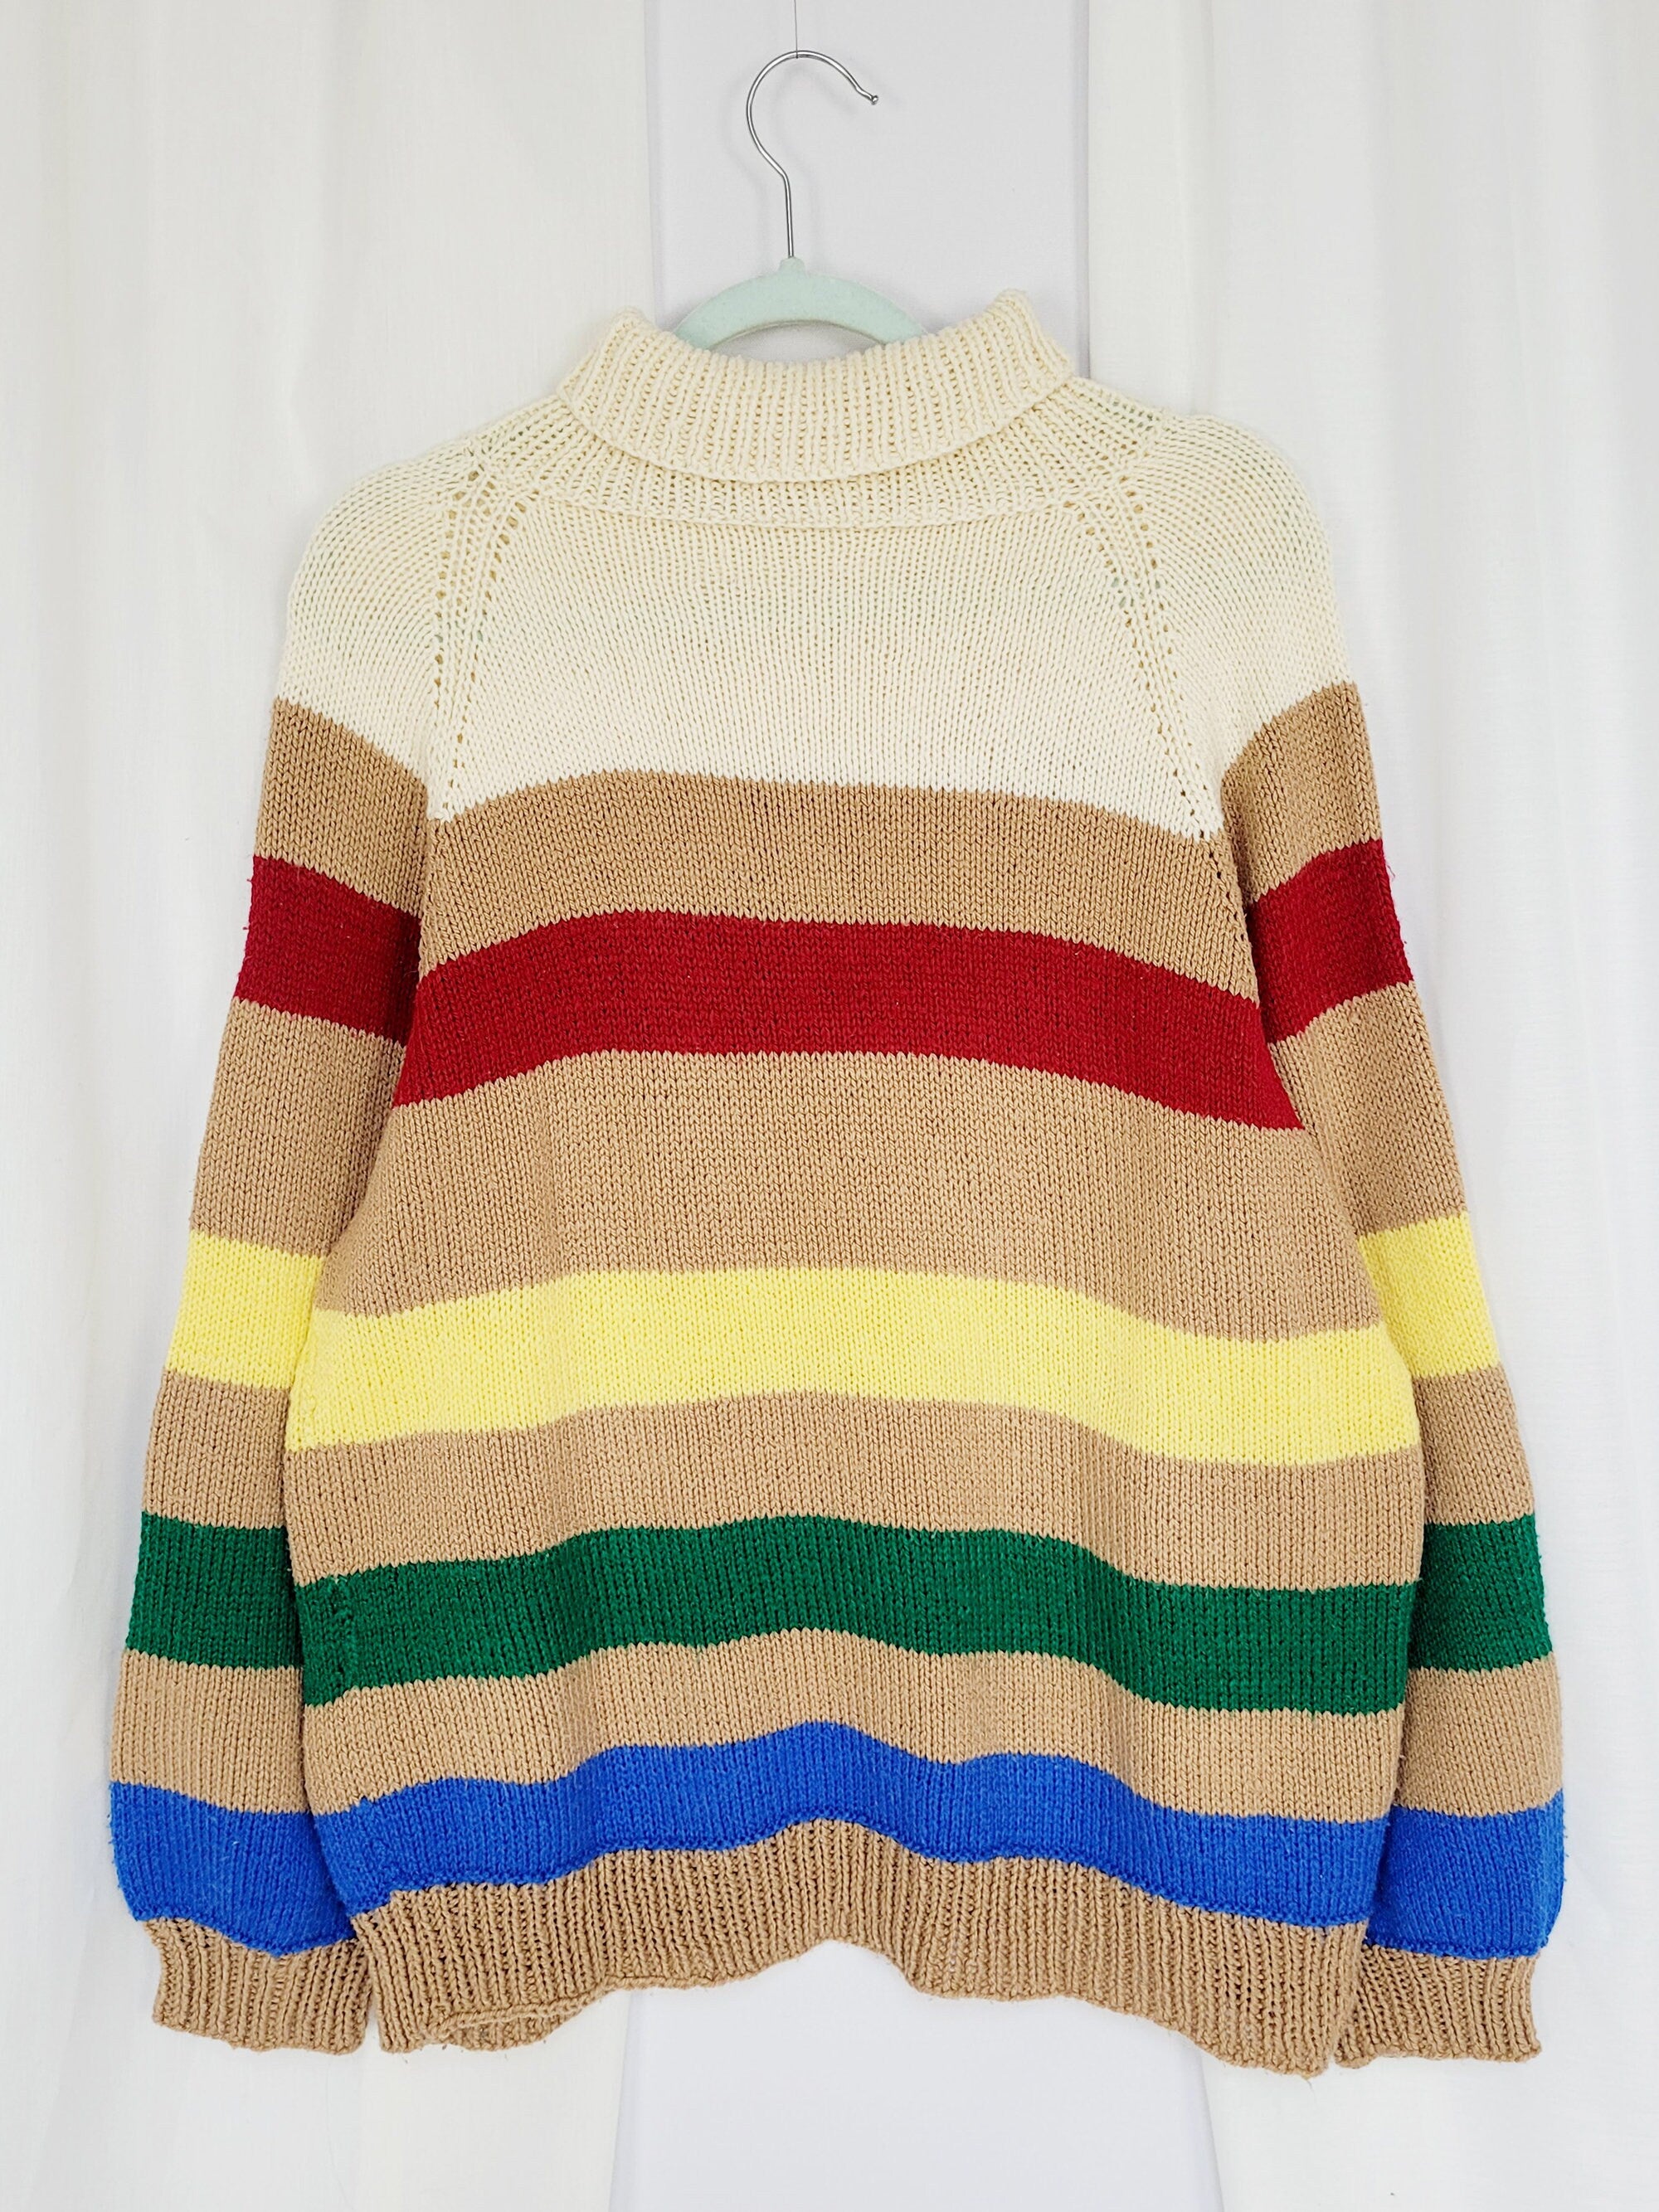 Retro 90s handknit striped colorful minimalist sweater top